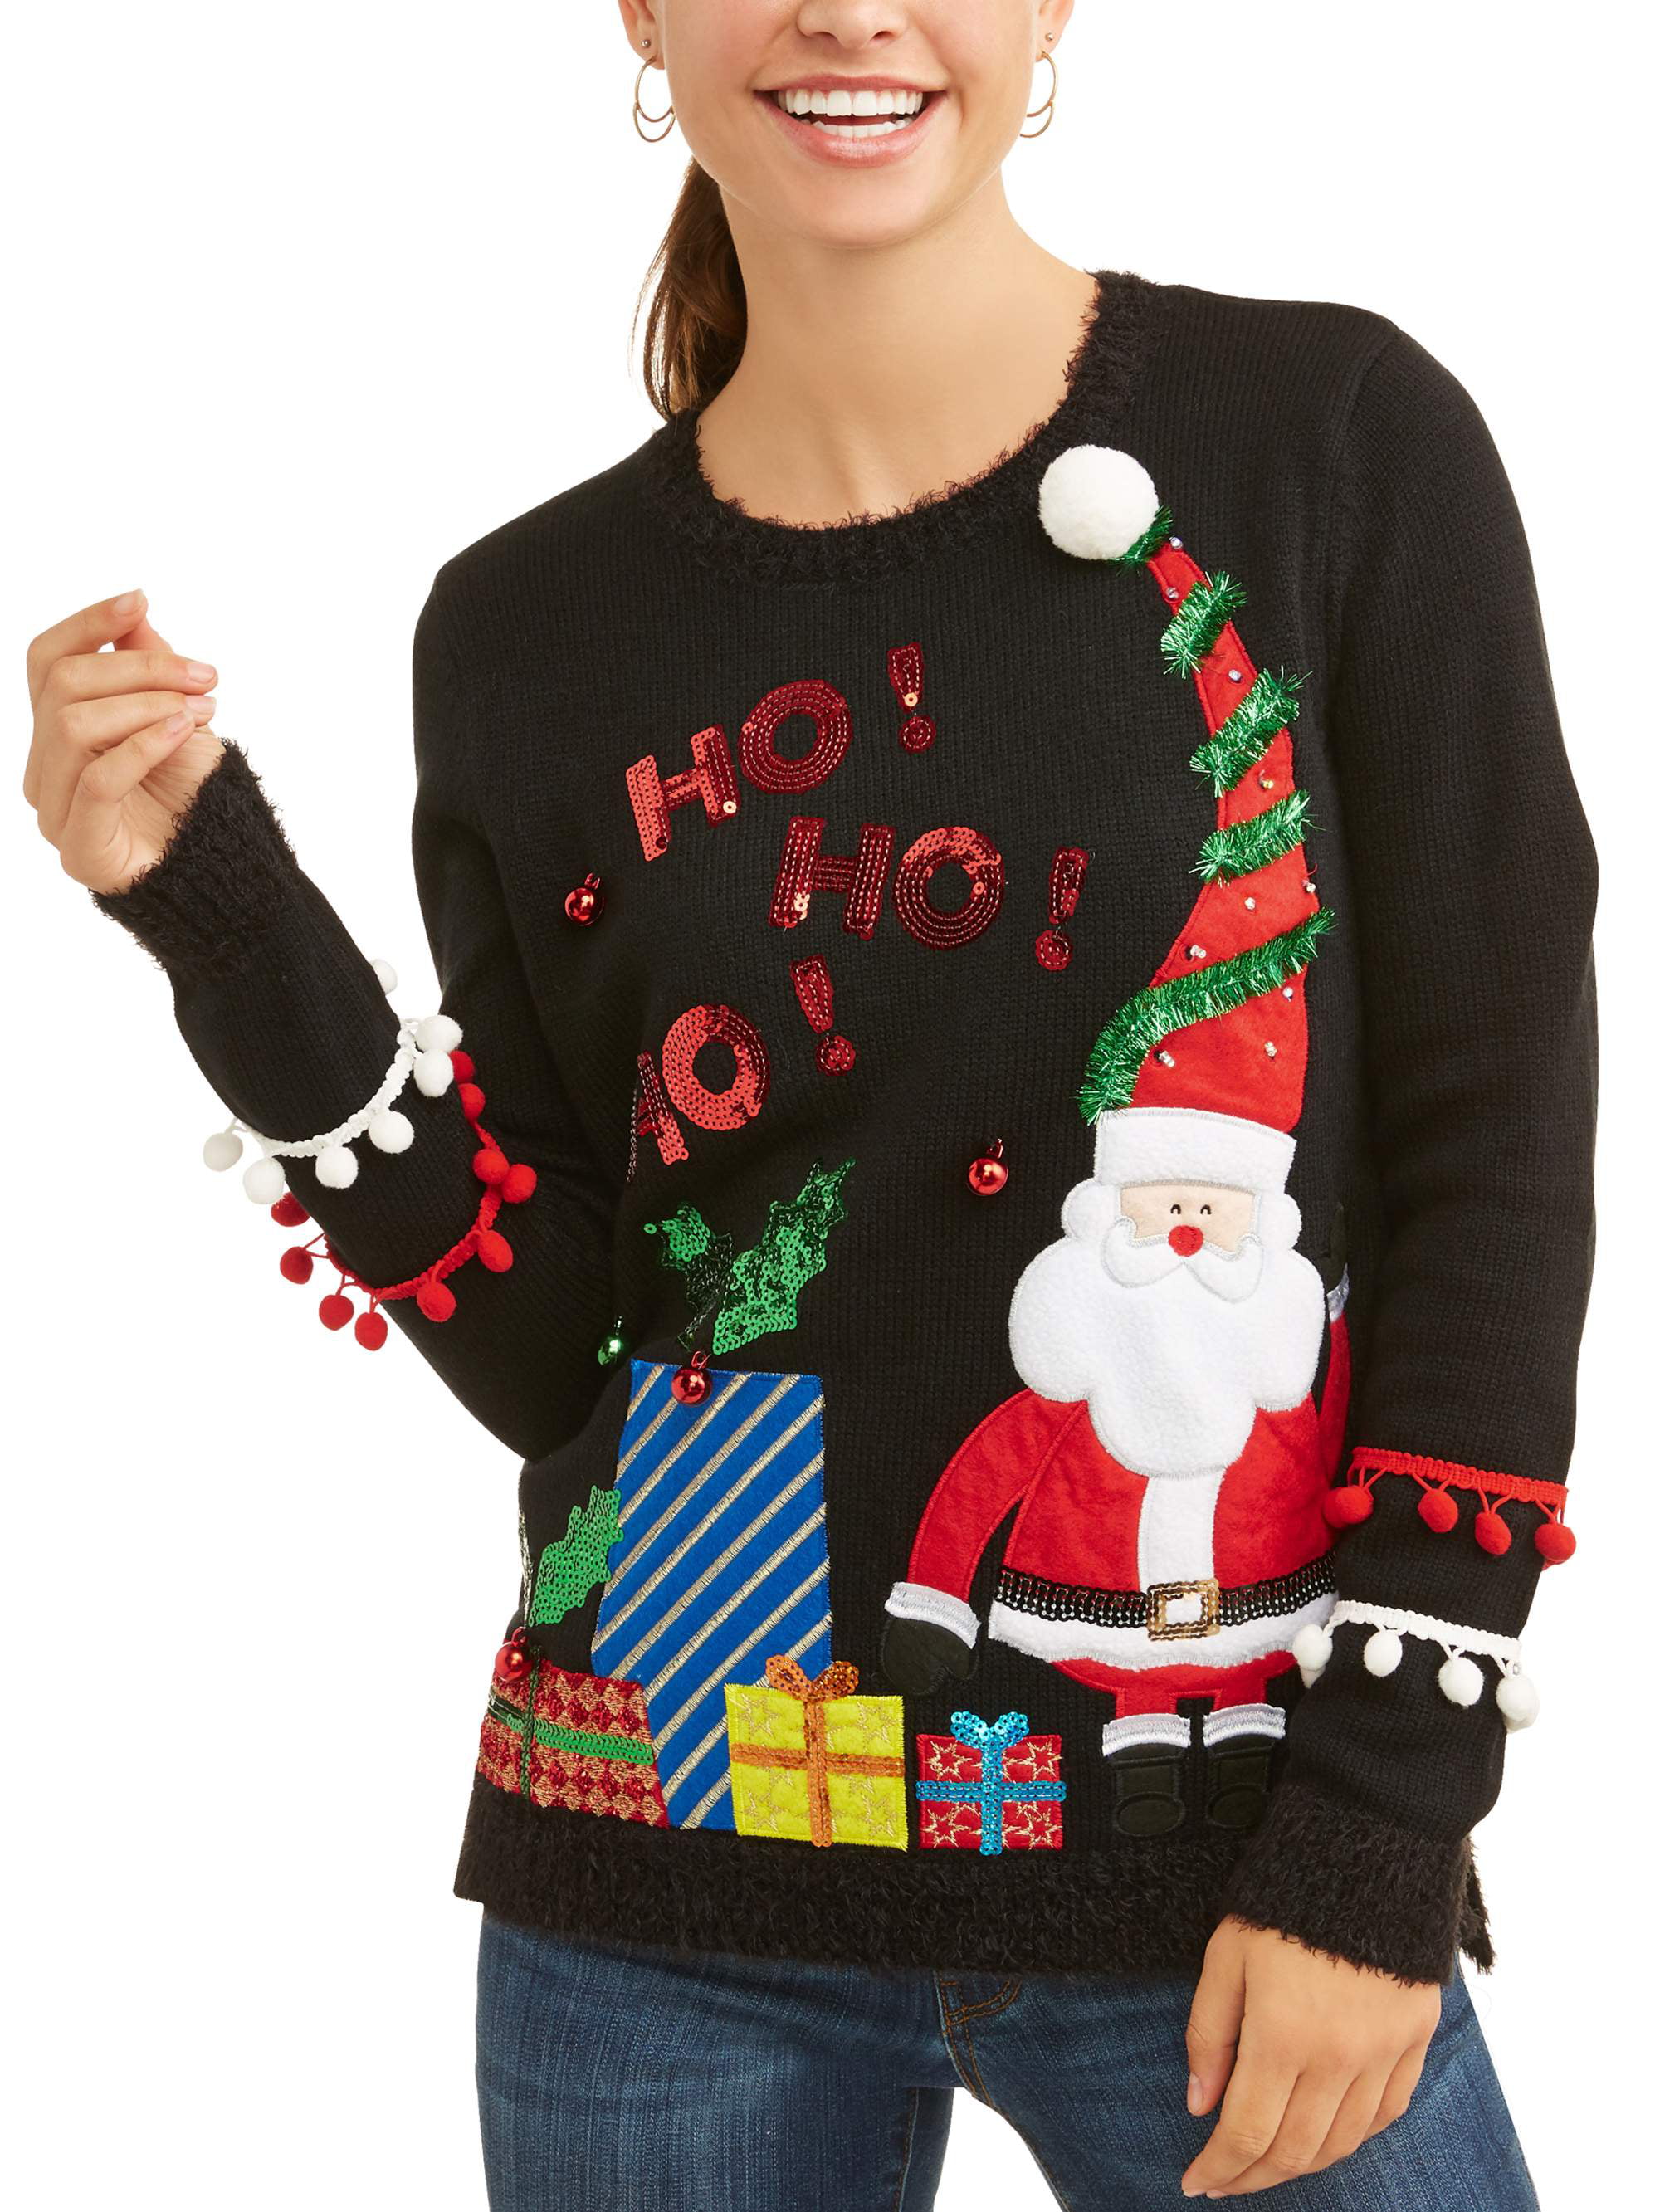 Christmas sweaters - wineshac